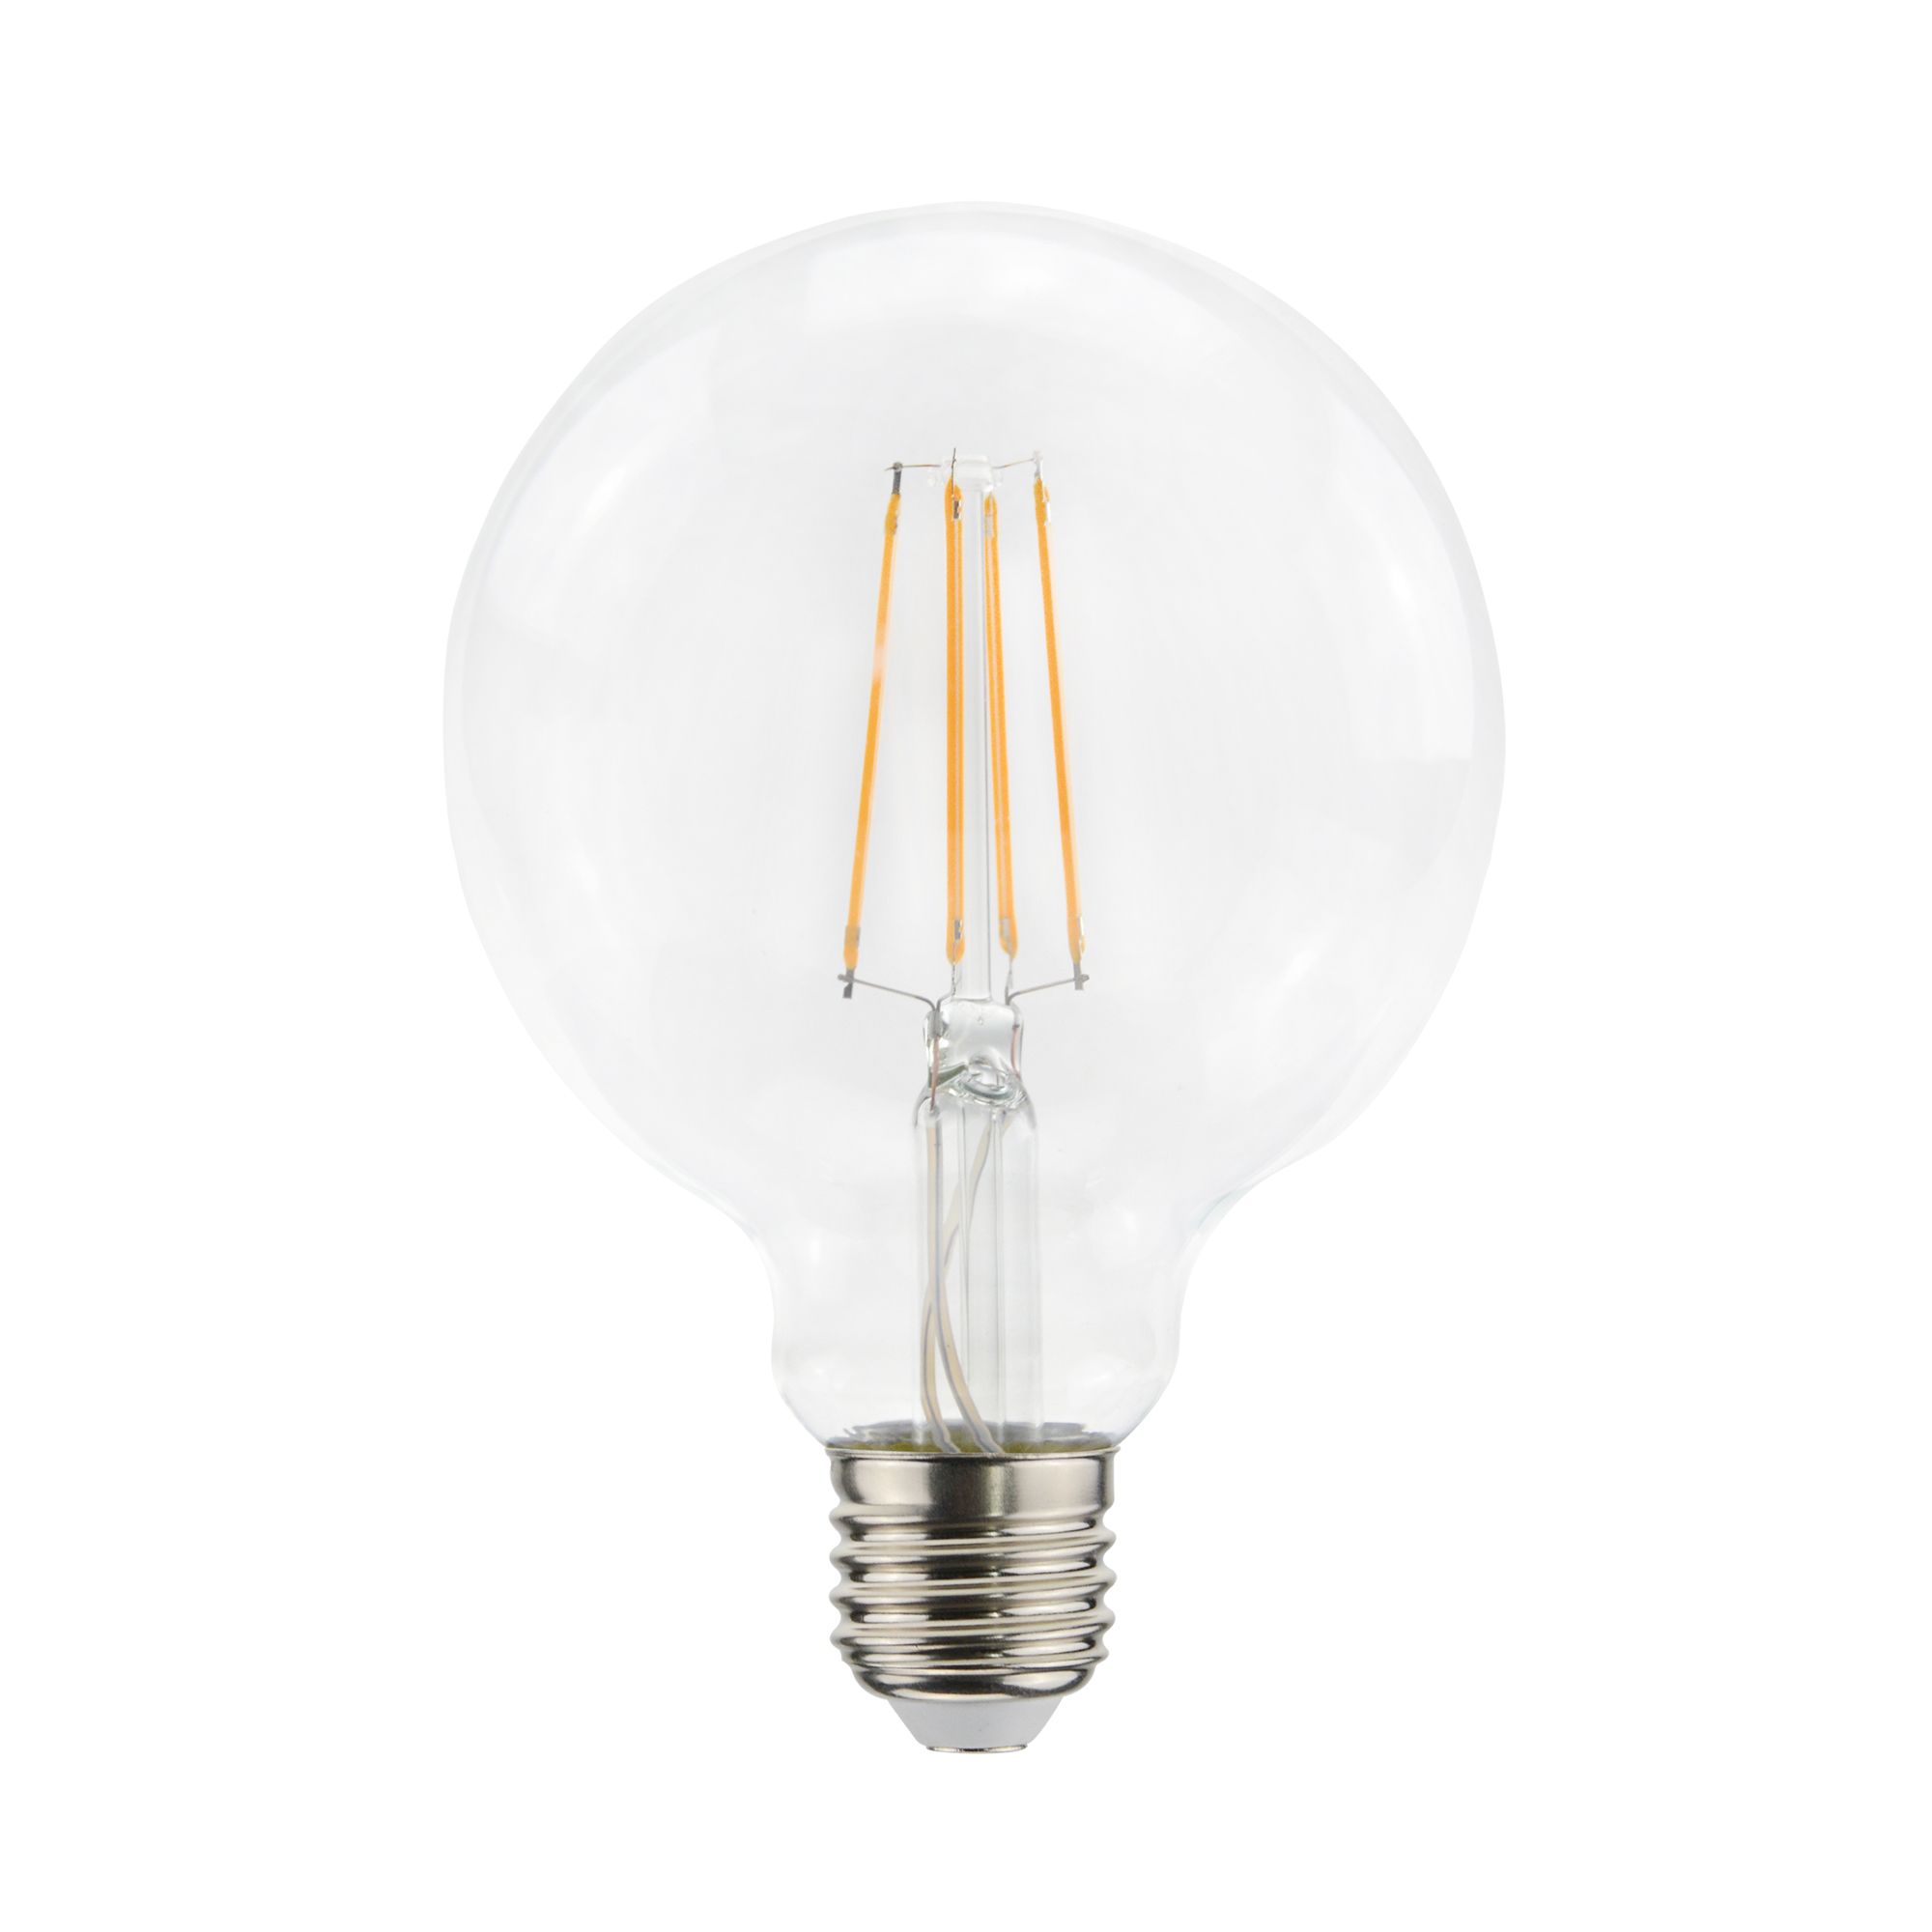 Ampoule LED Filament G45 3W E27 12V BAILEY